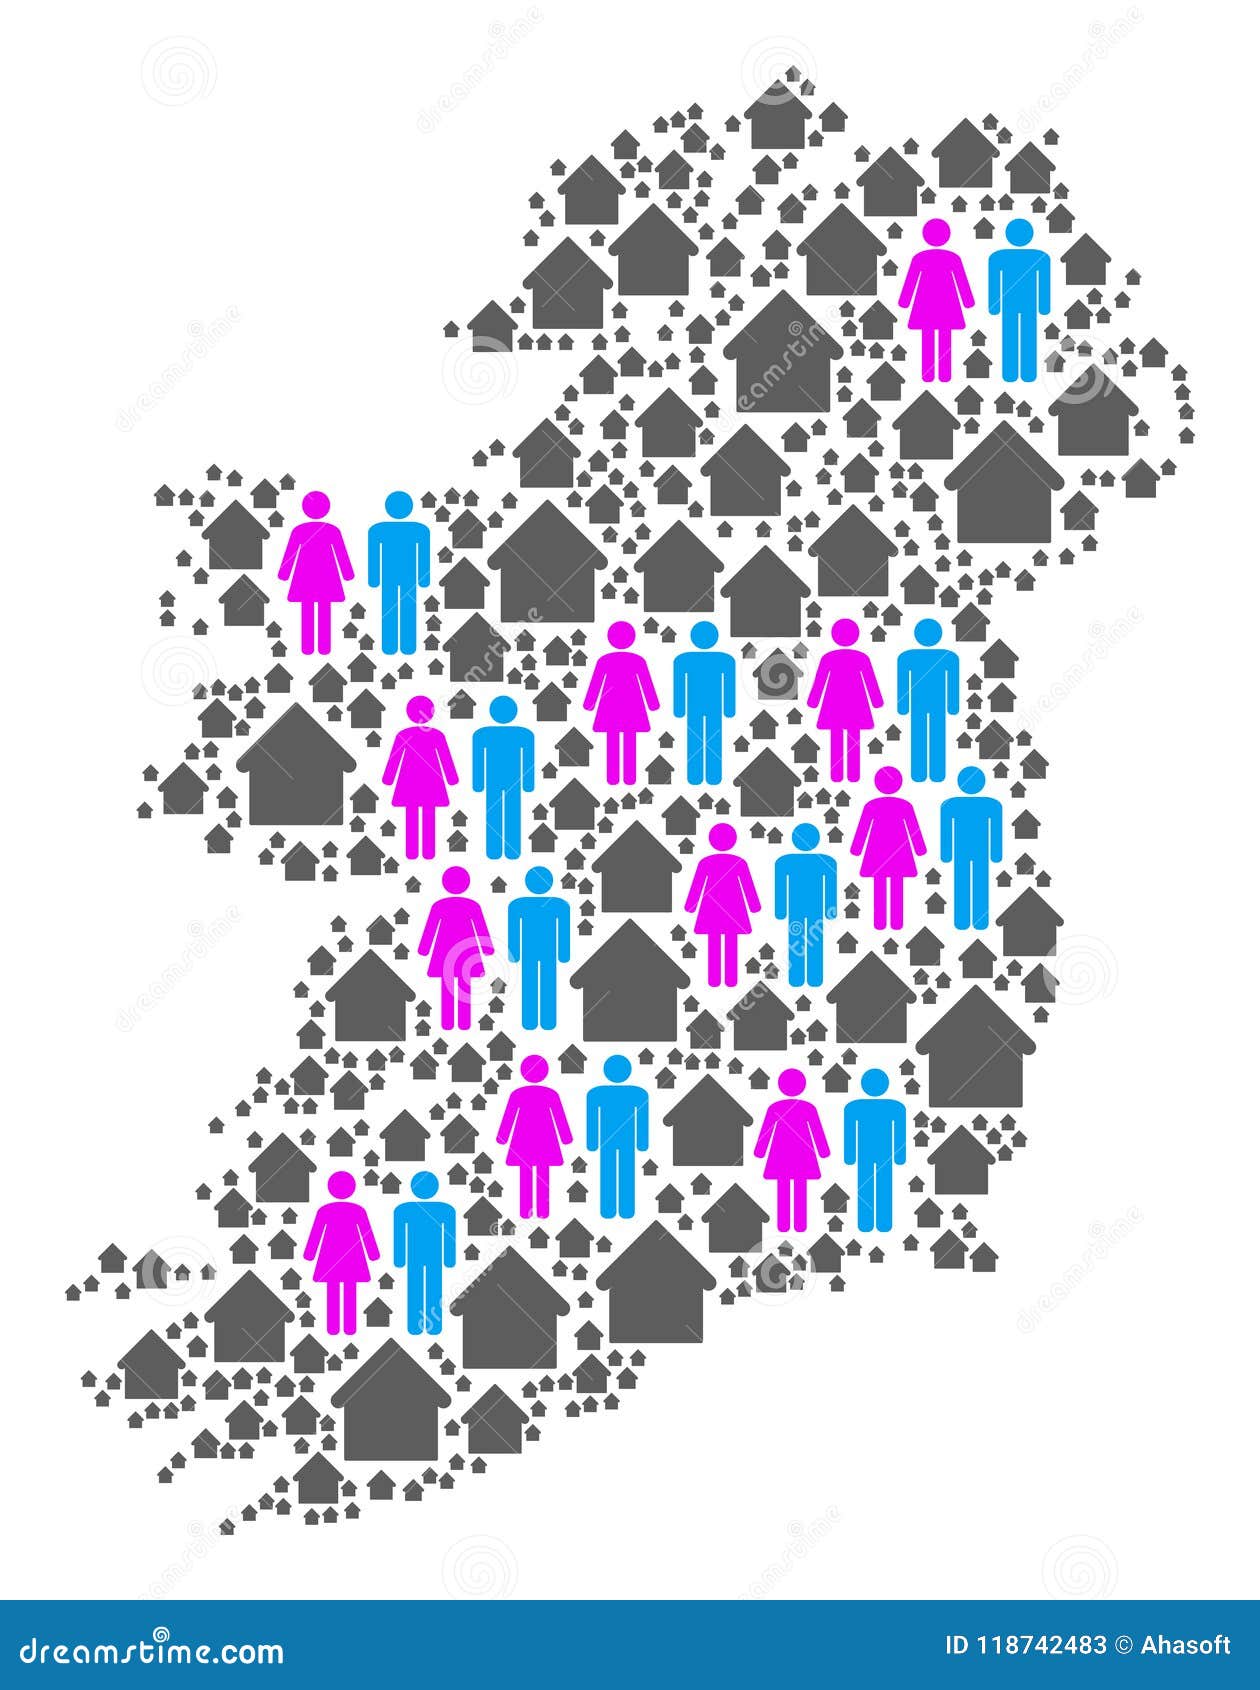 Demographics Ireland Countries Map Stock Vector Illustration of